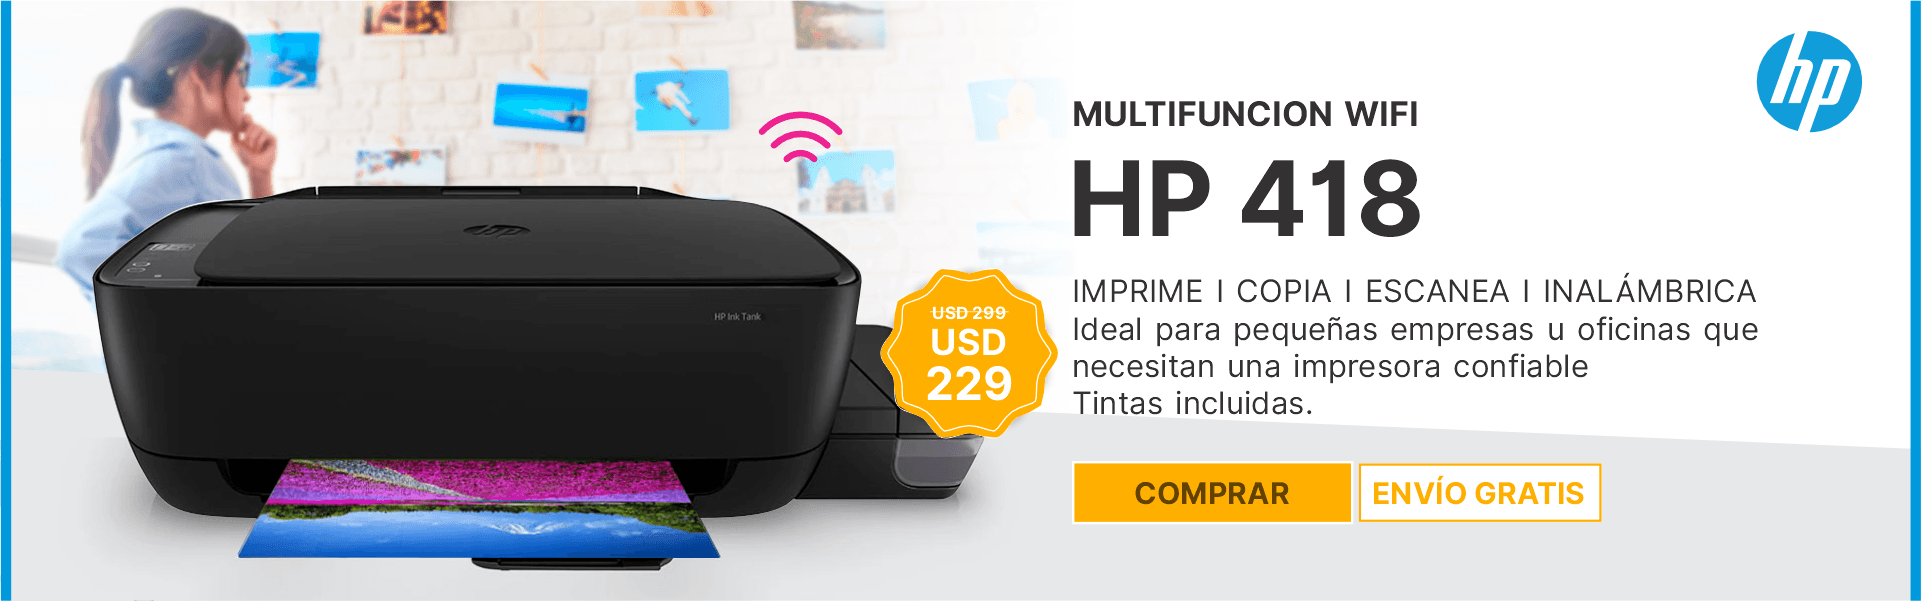 Impresora HP418